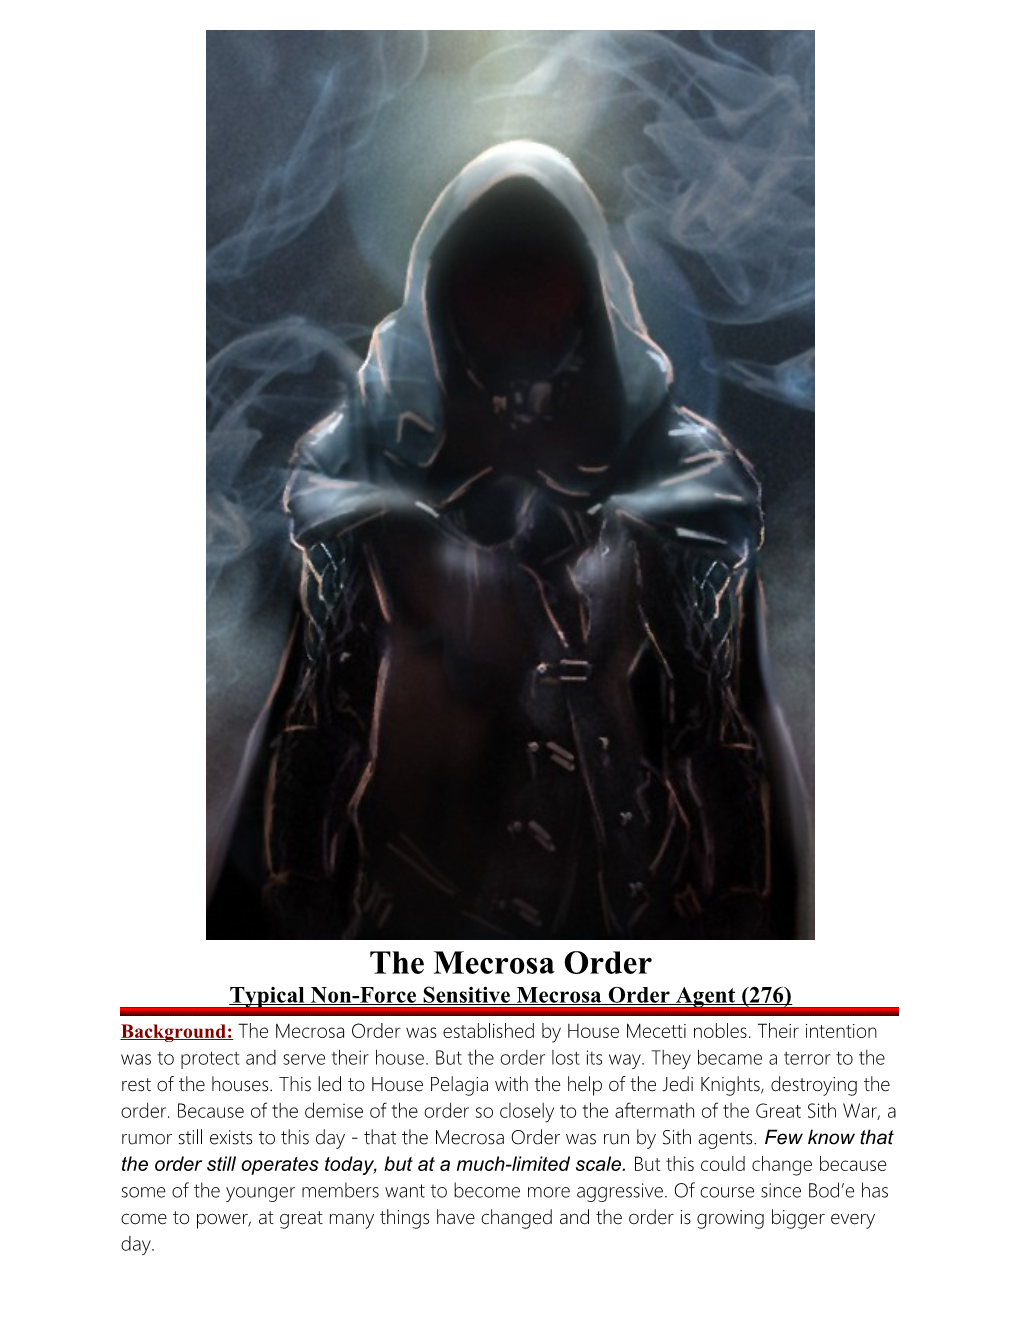 The Mecrosa Order